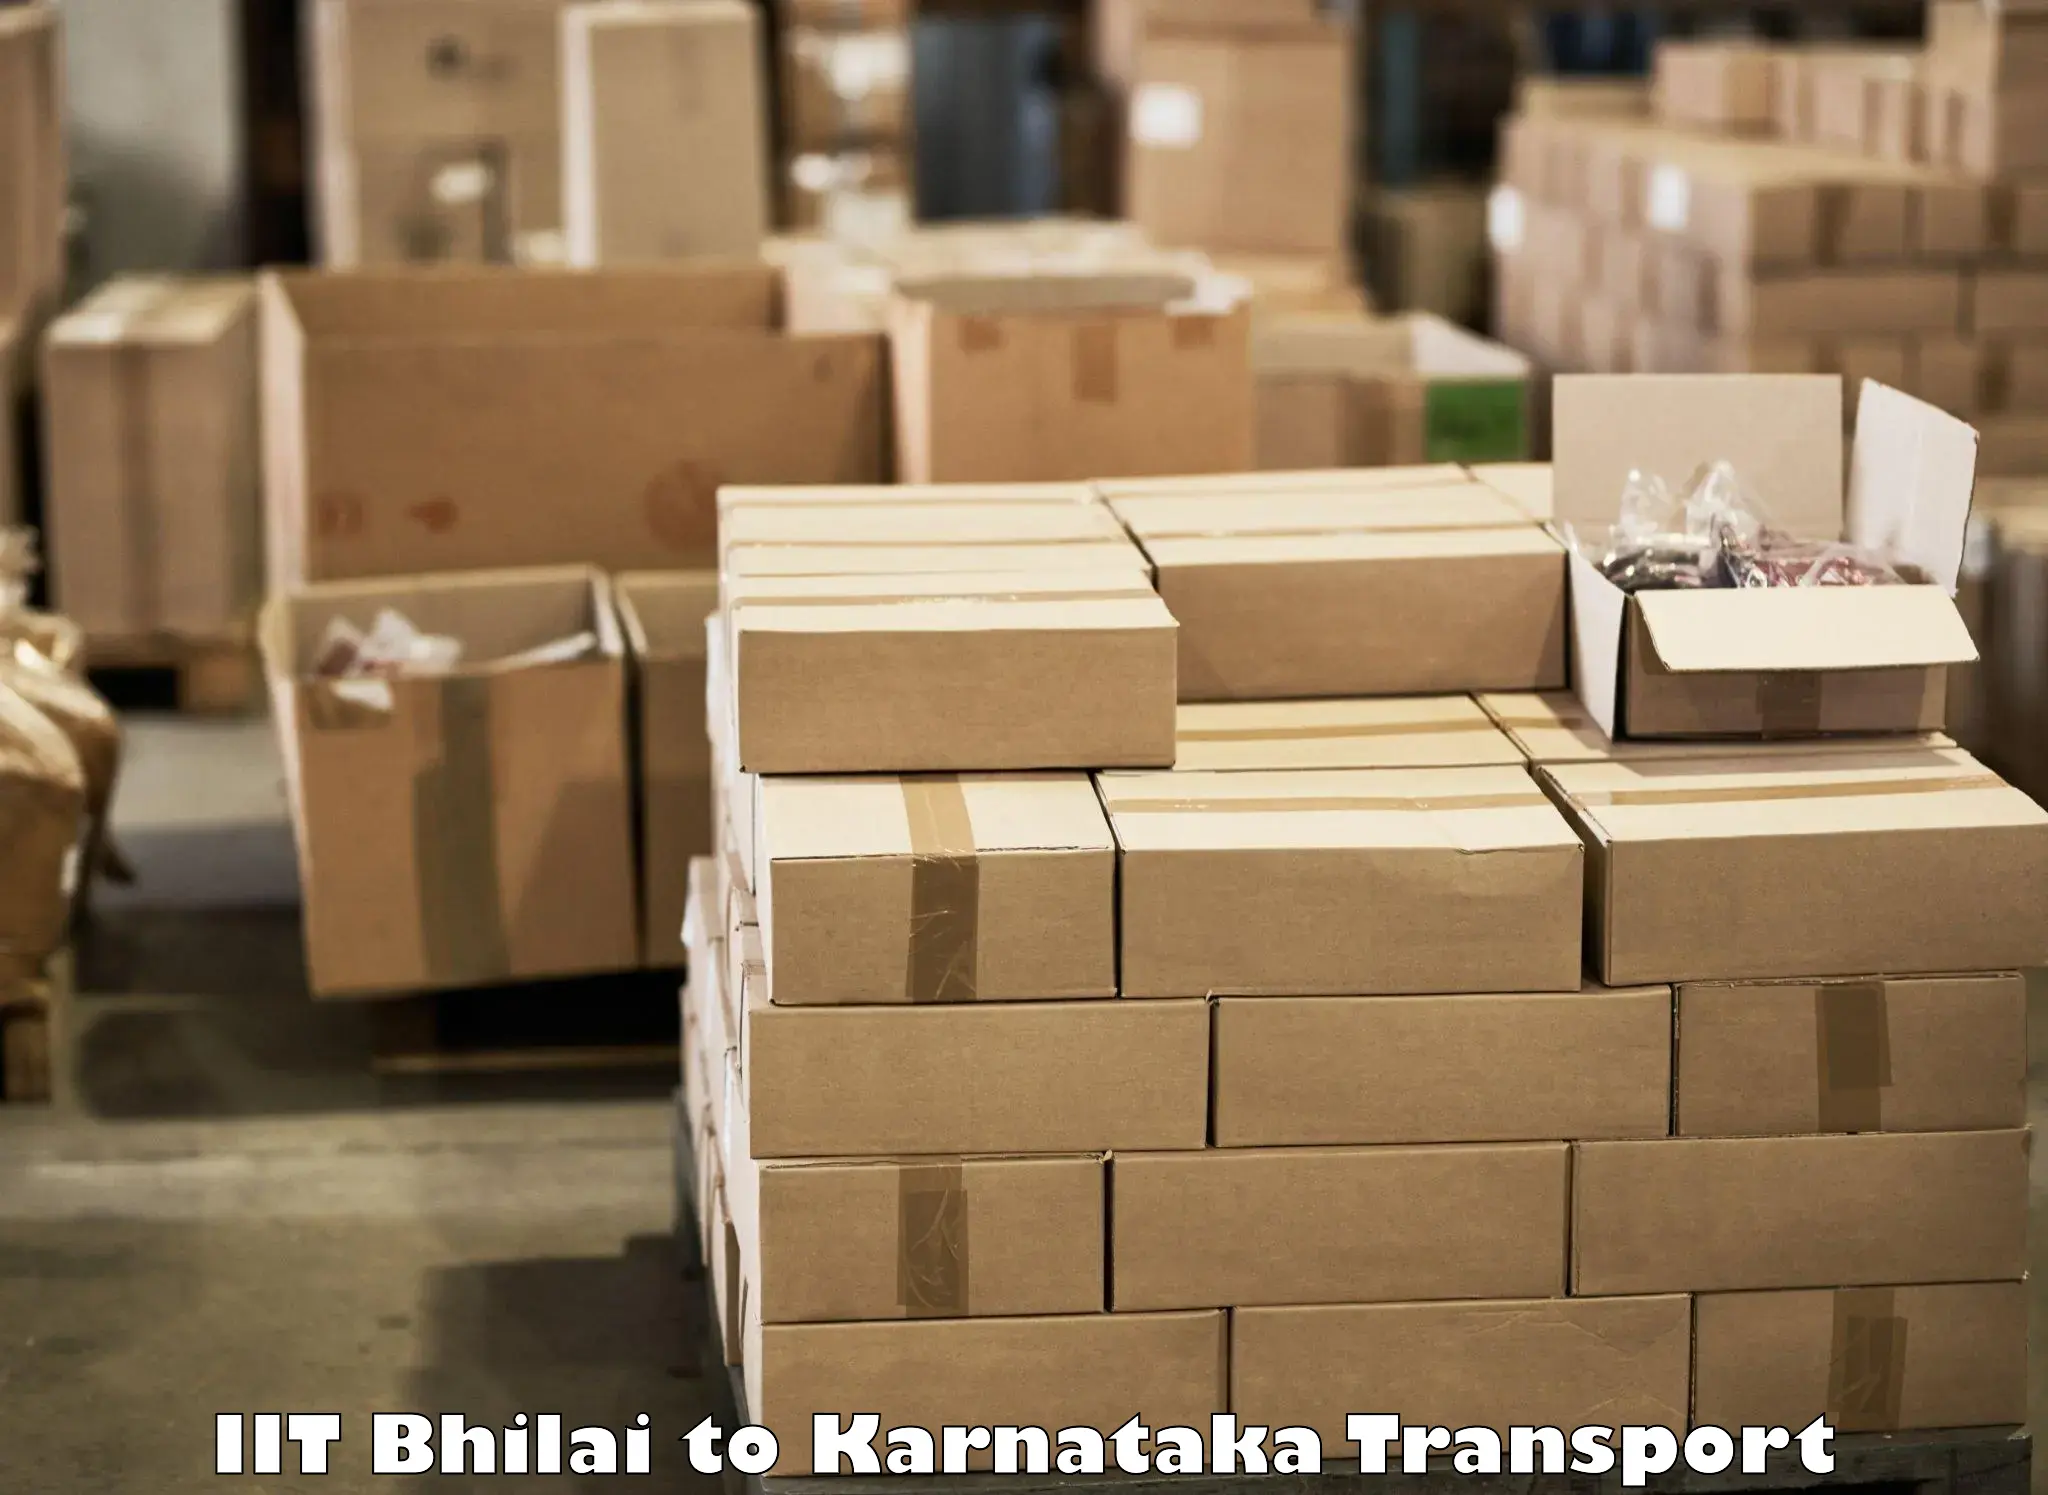 Truck transport companies in India IIT Bhilai to Dharwad